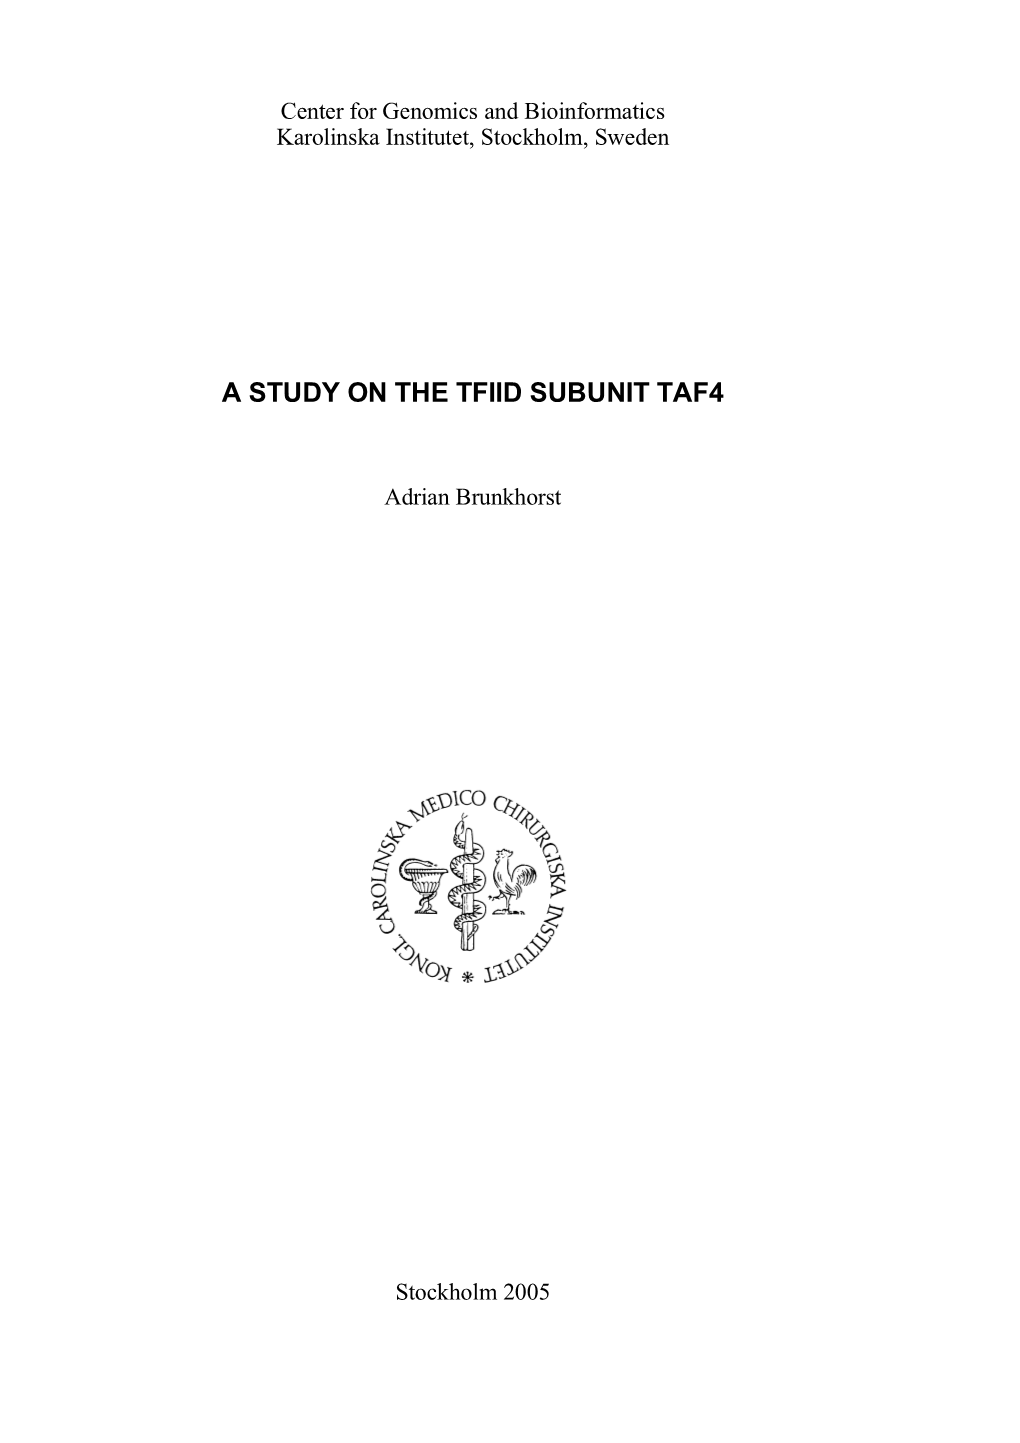 A Study on the Tfiid Subunit Taf4